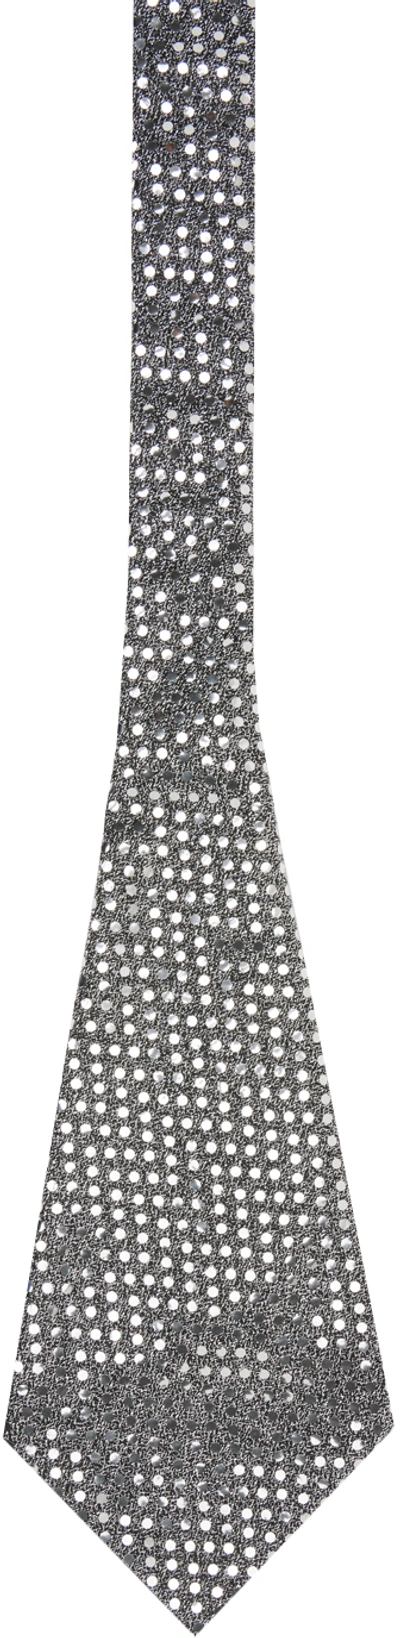 Erl Silver Sequin Tie In 1 Silver